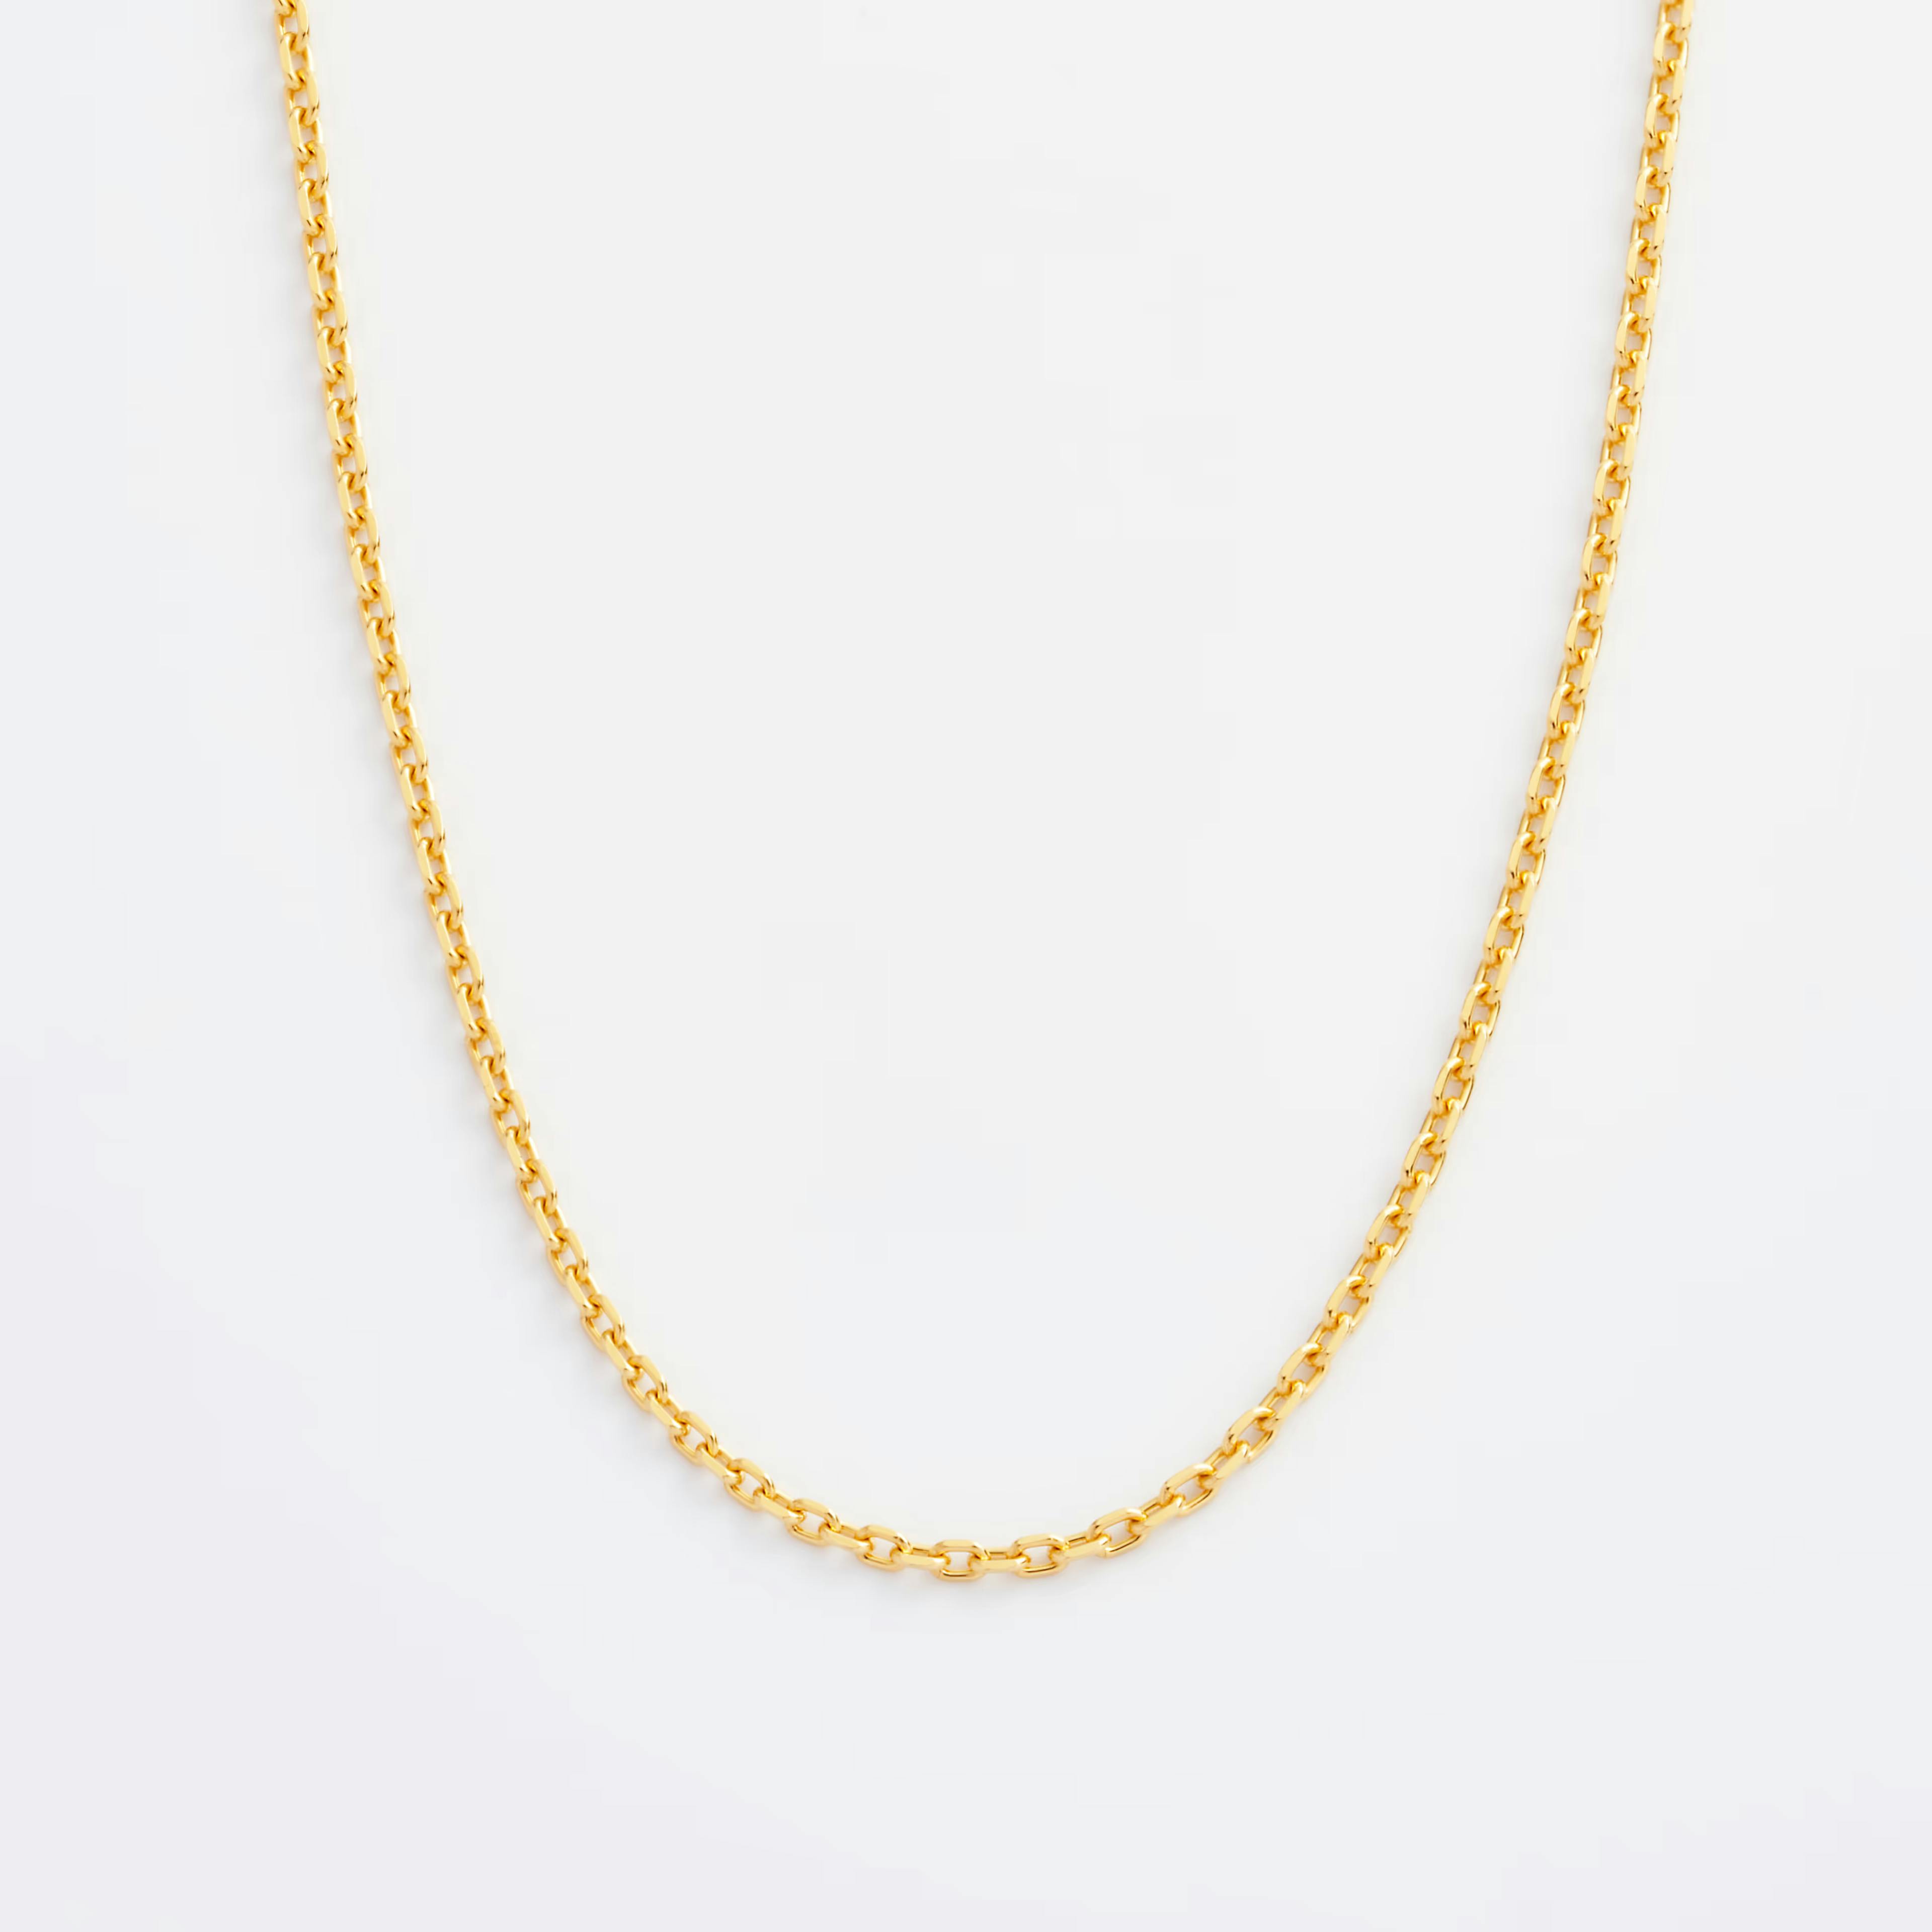 Shop Gold Necklace Chains Wide Diamond Cut Cable Chain Necklace